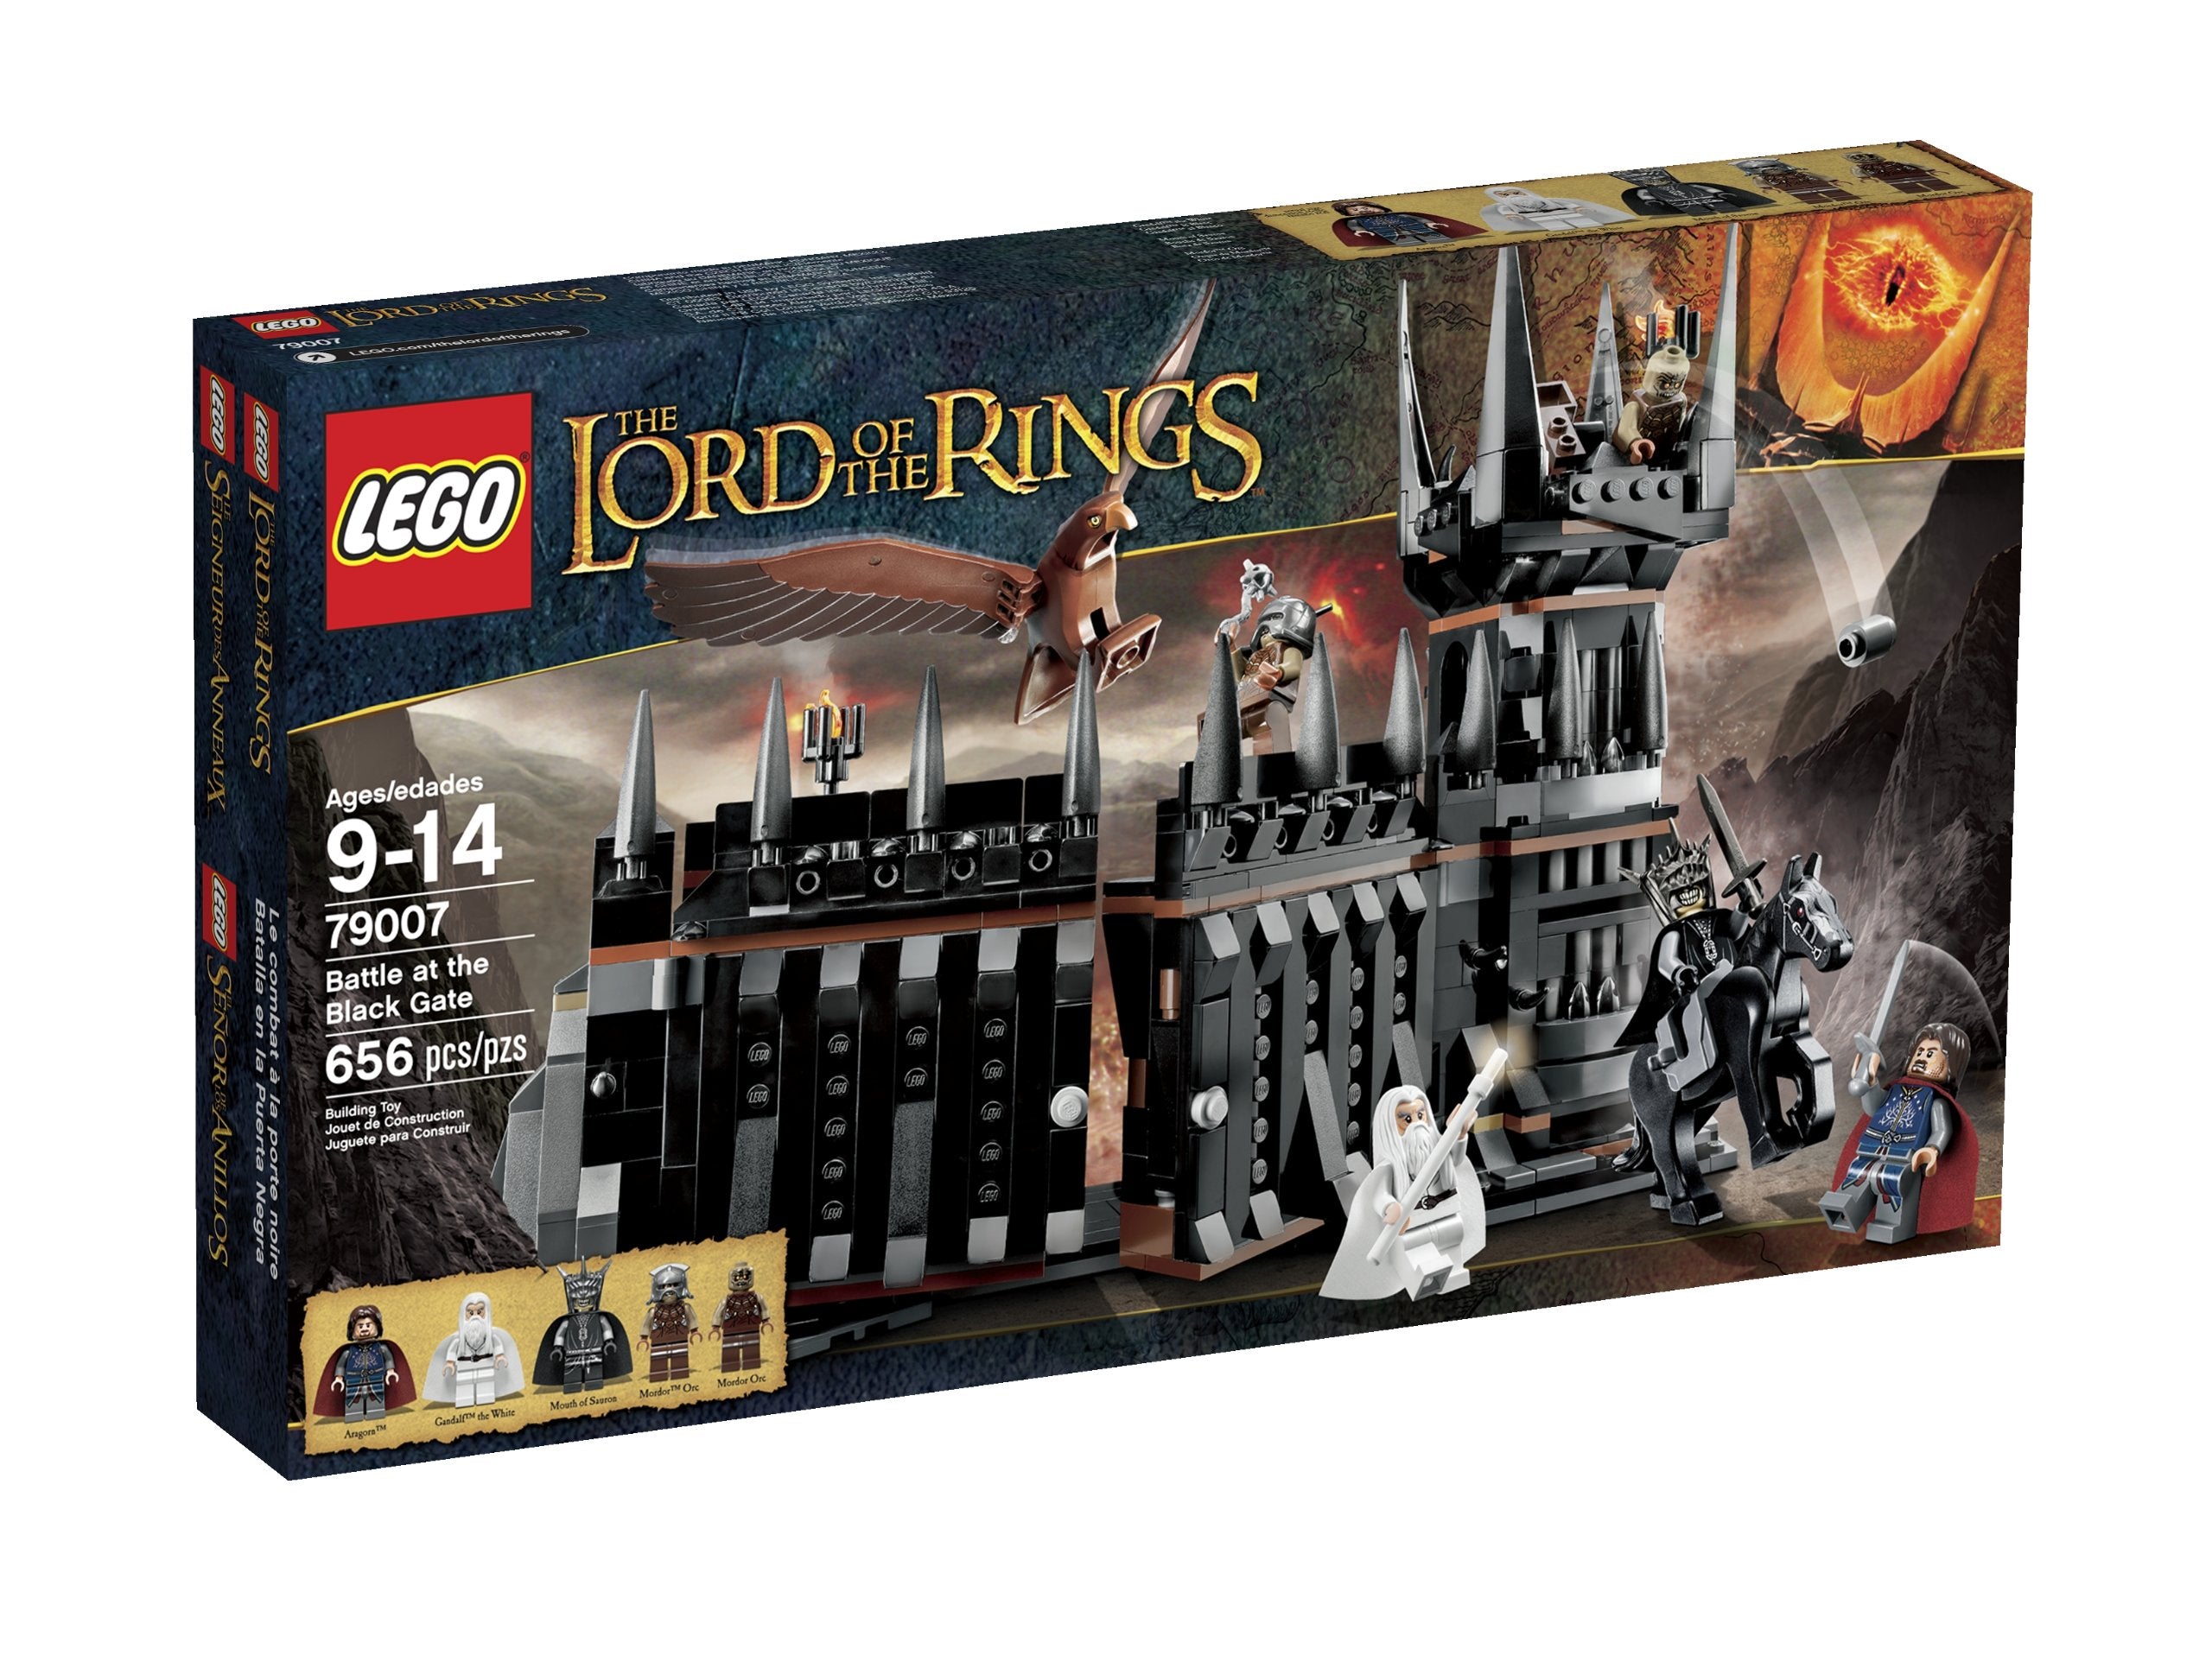 LEGO LOTR Battle at The Black Gate 79007